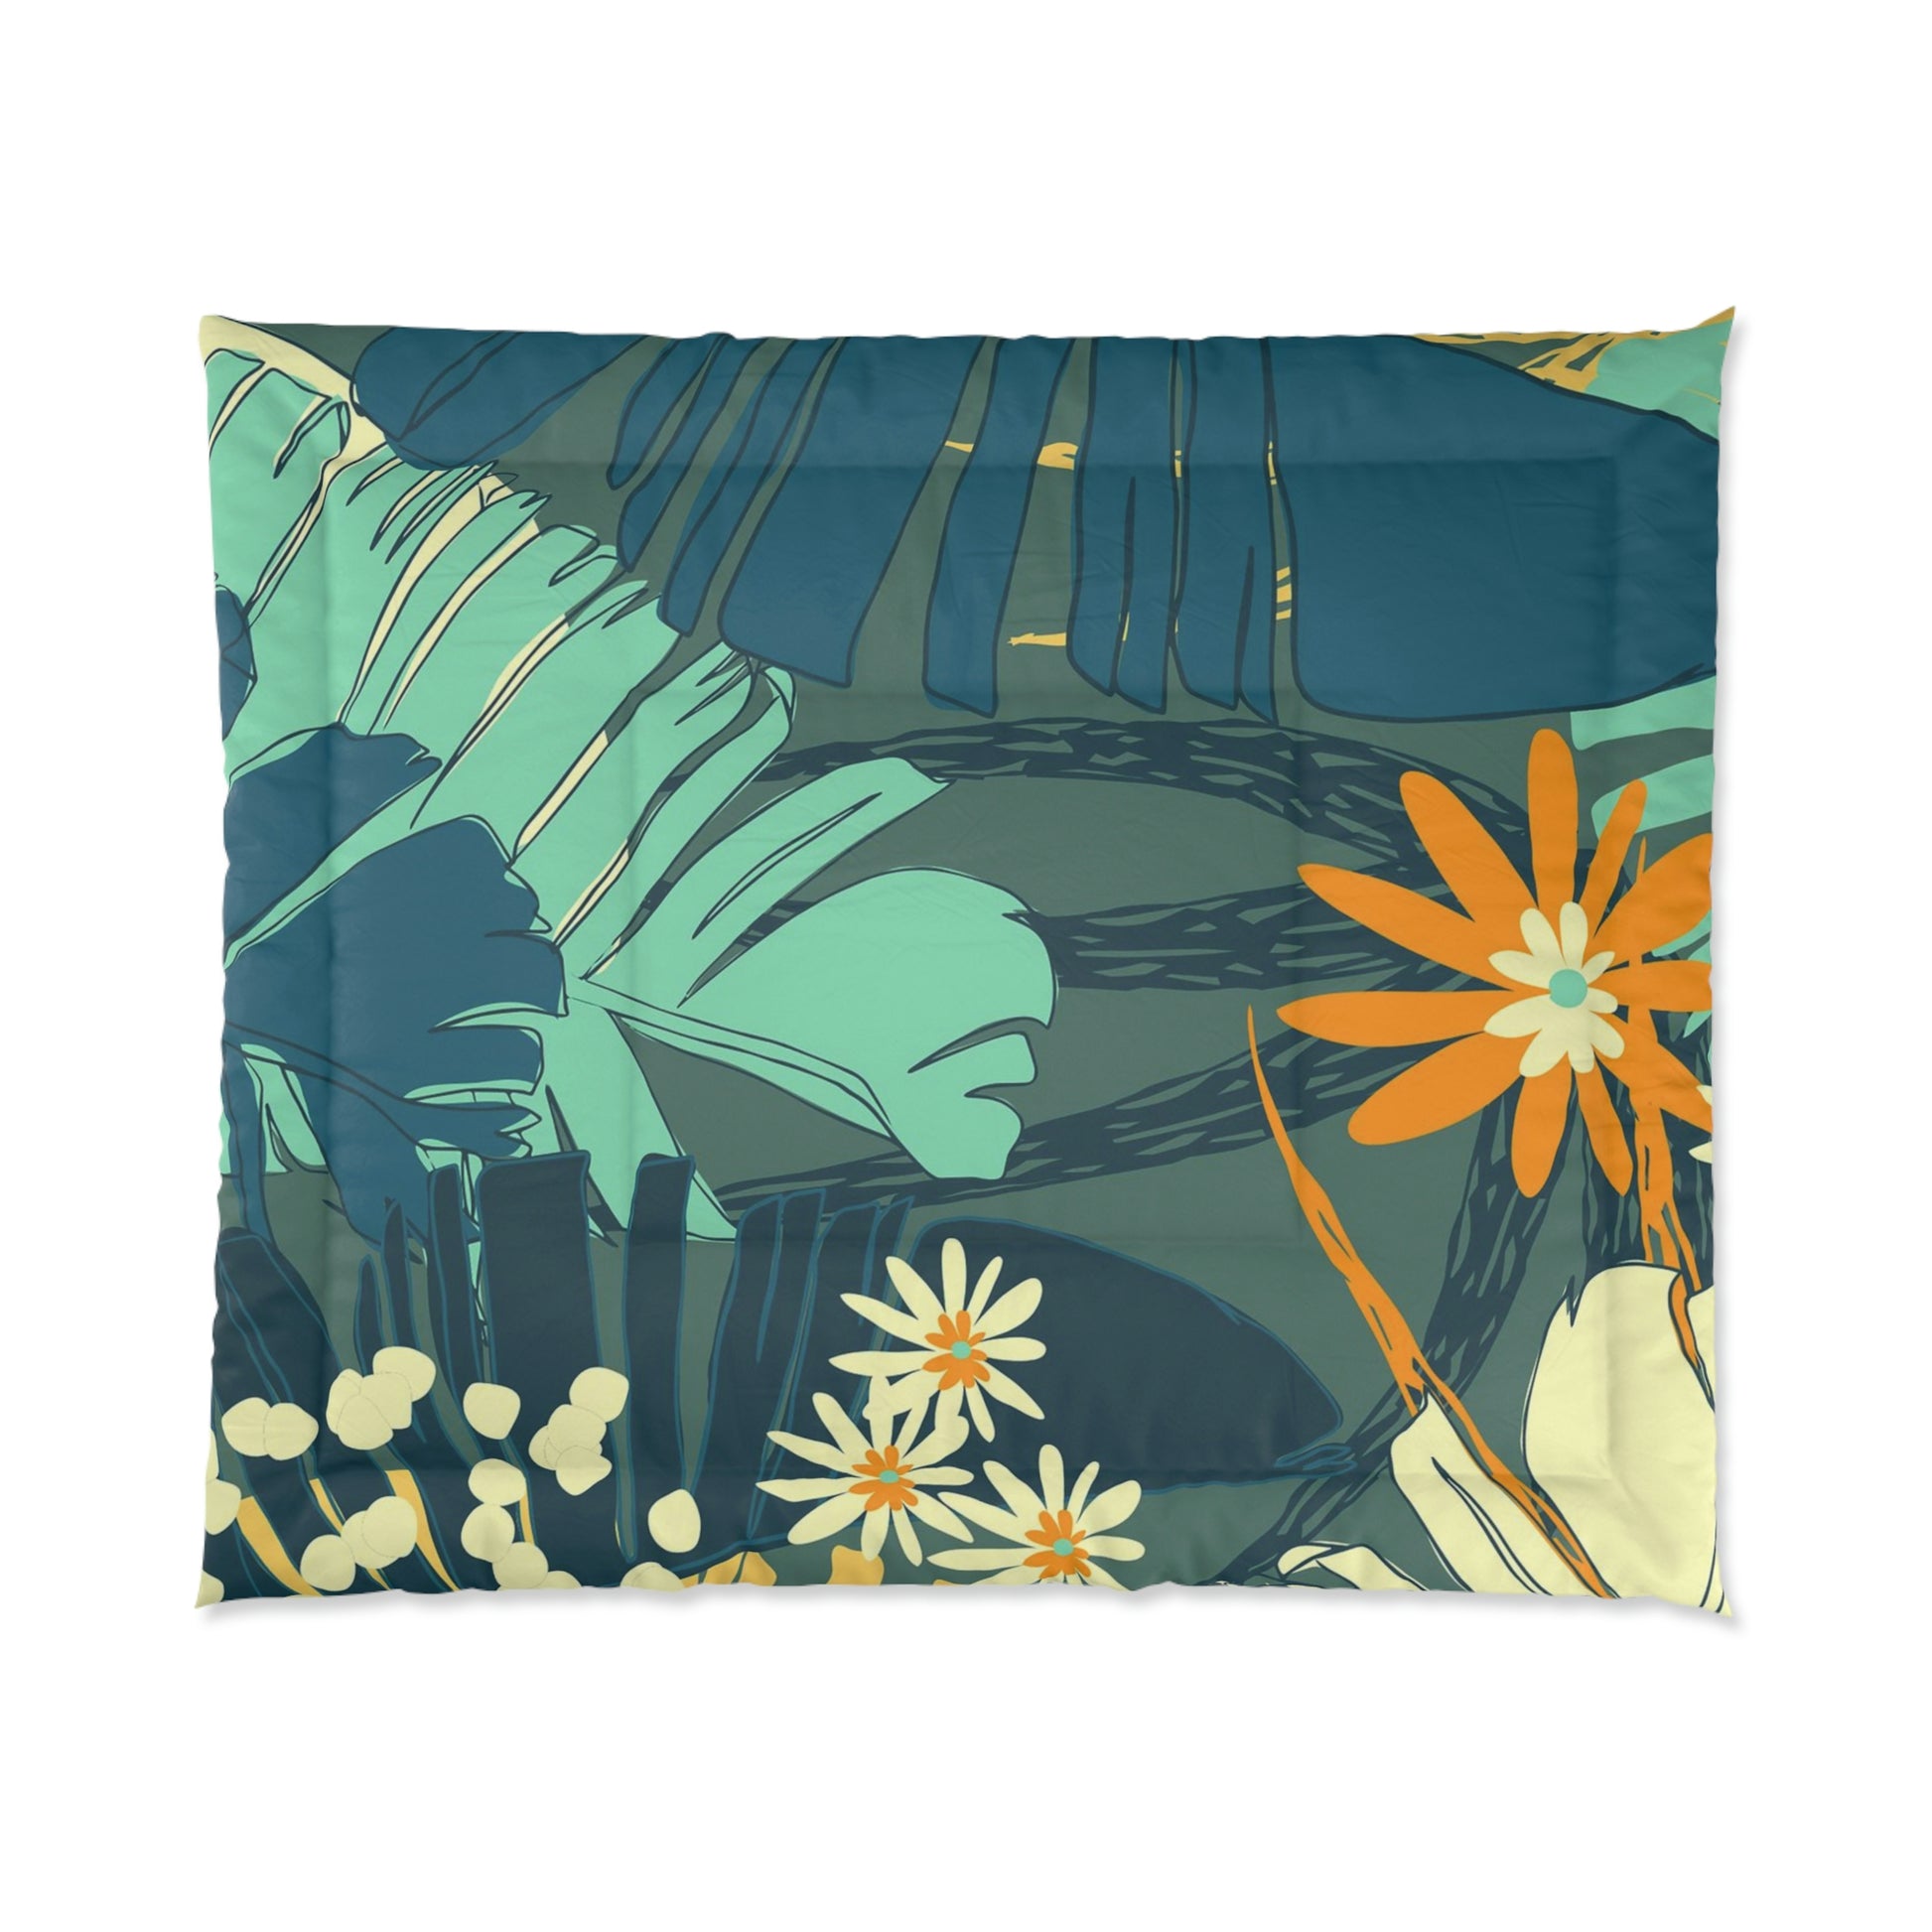 Jungle Blues Collection Comforter, Designer Tropical Print Comforter